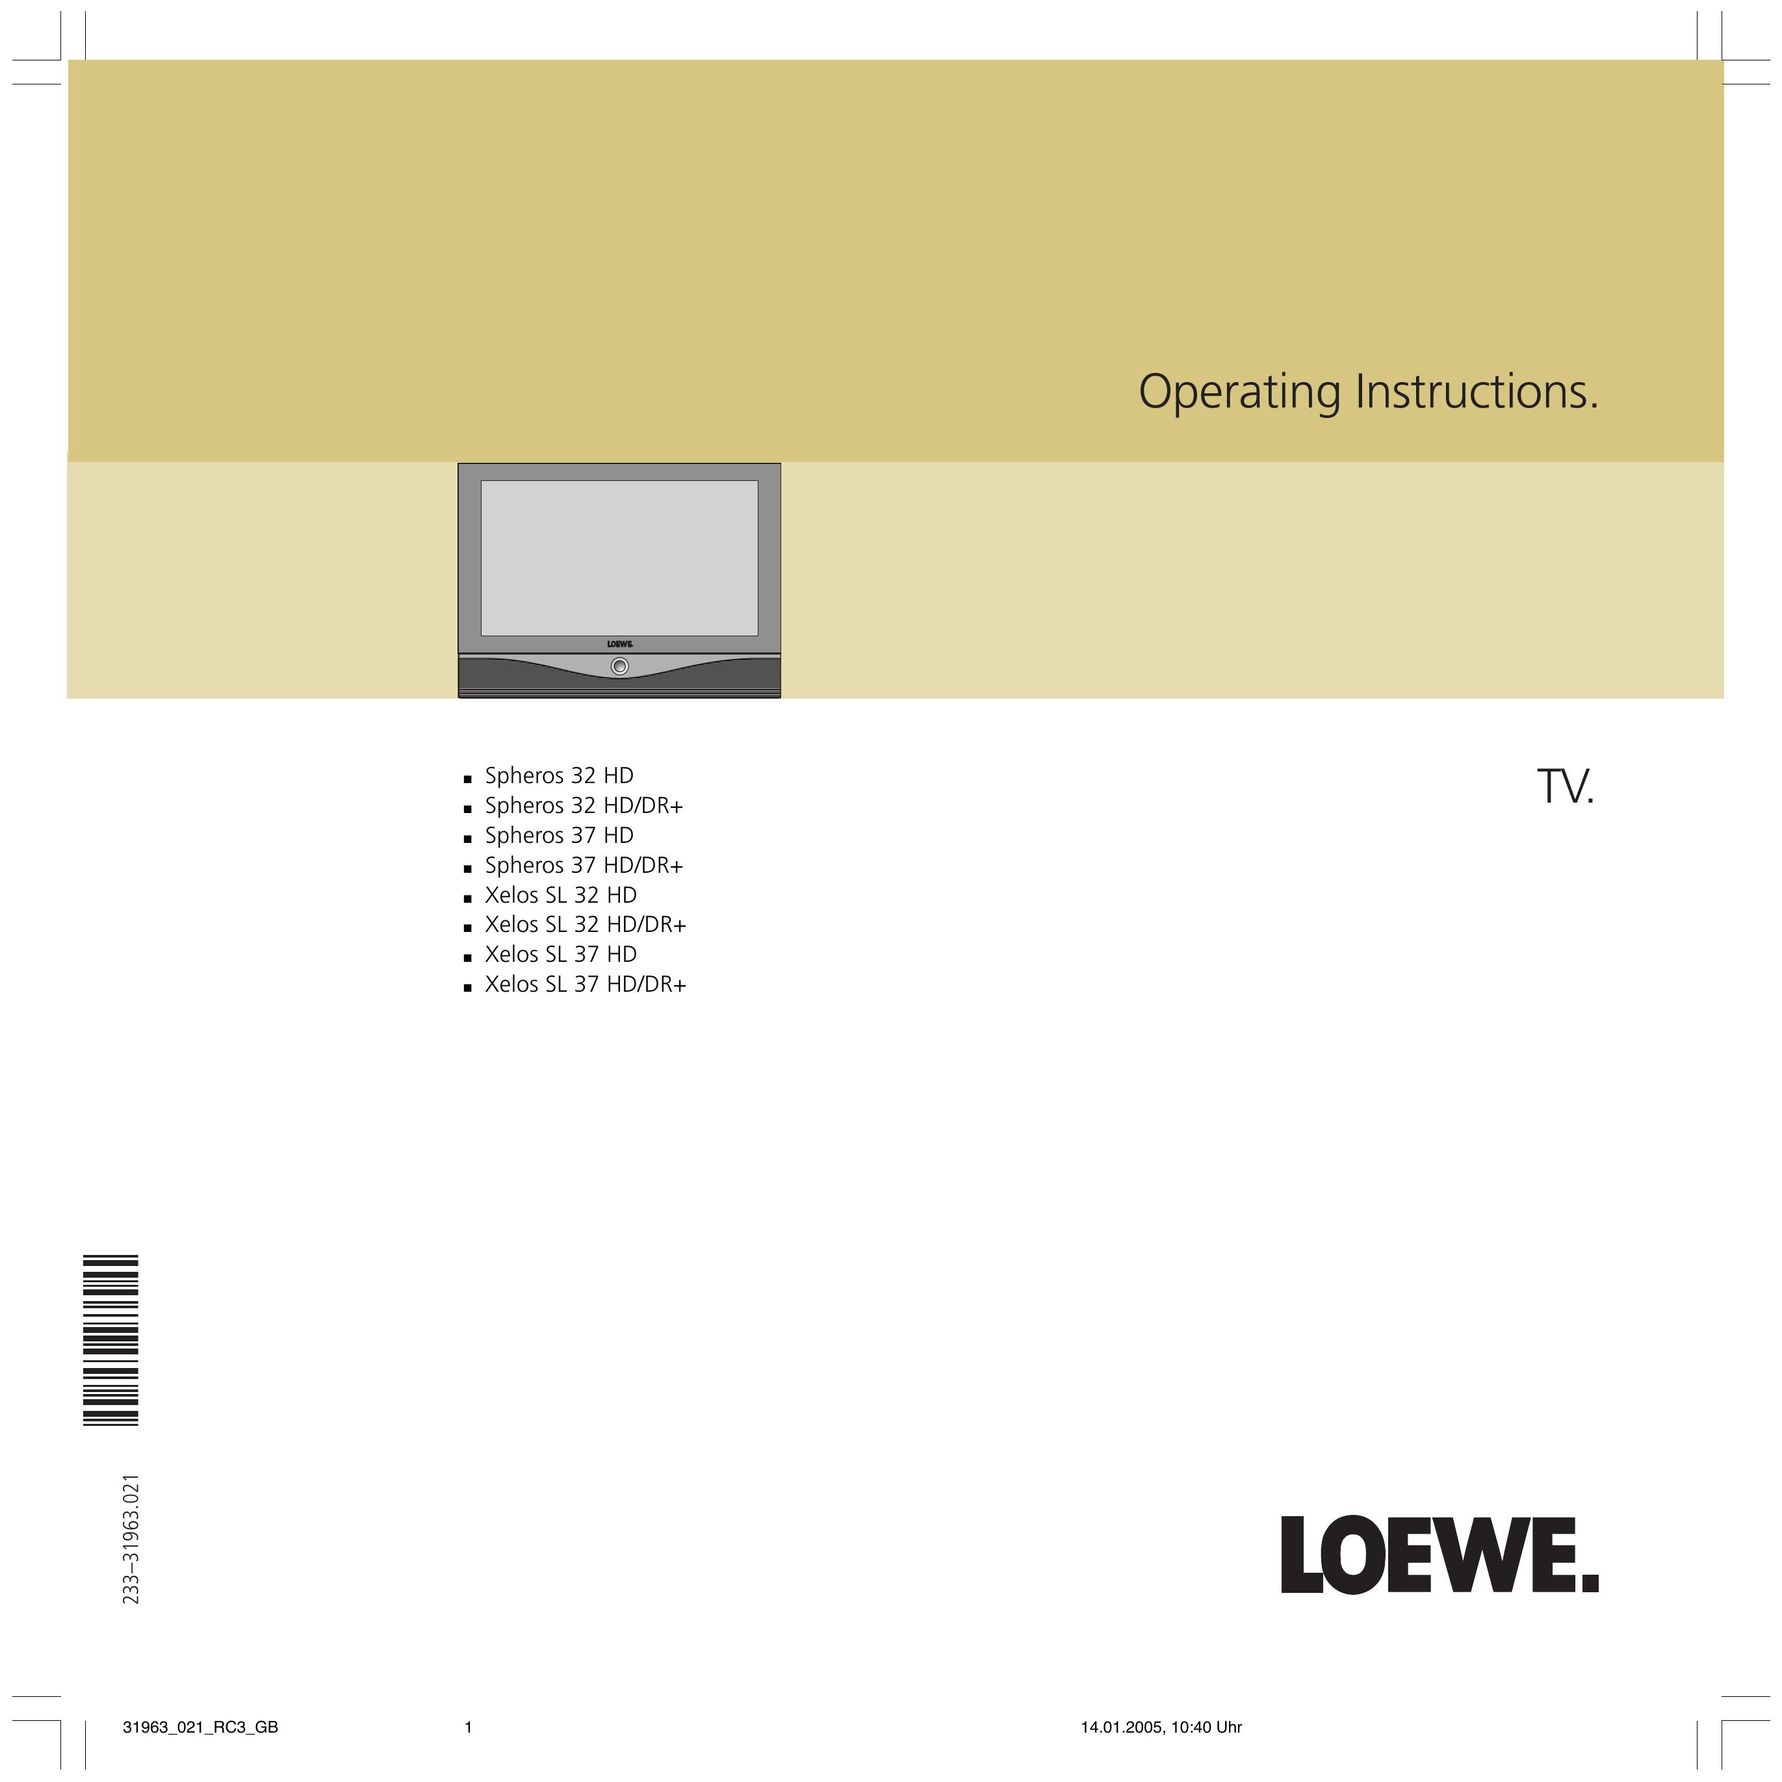 Loewe 32HD/DR+ Flat Panel Television User Manual